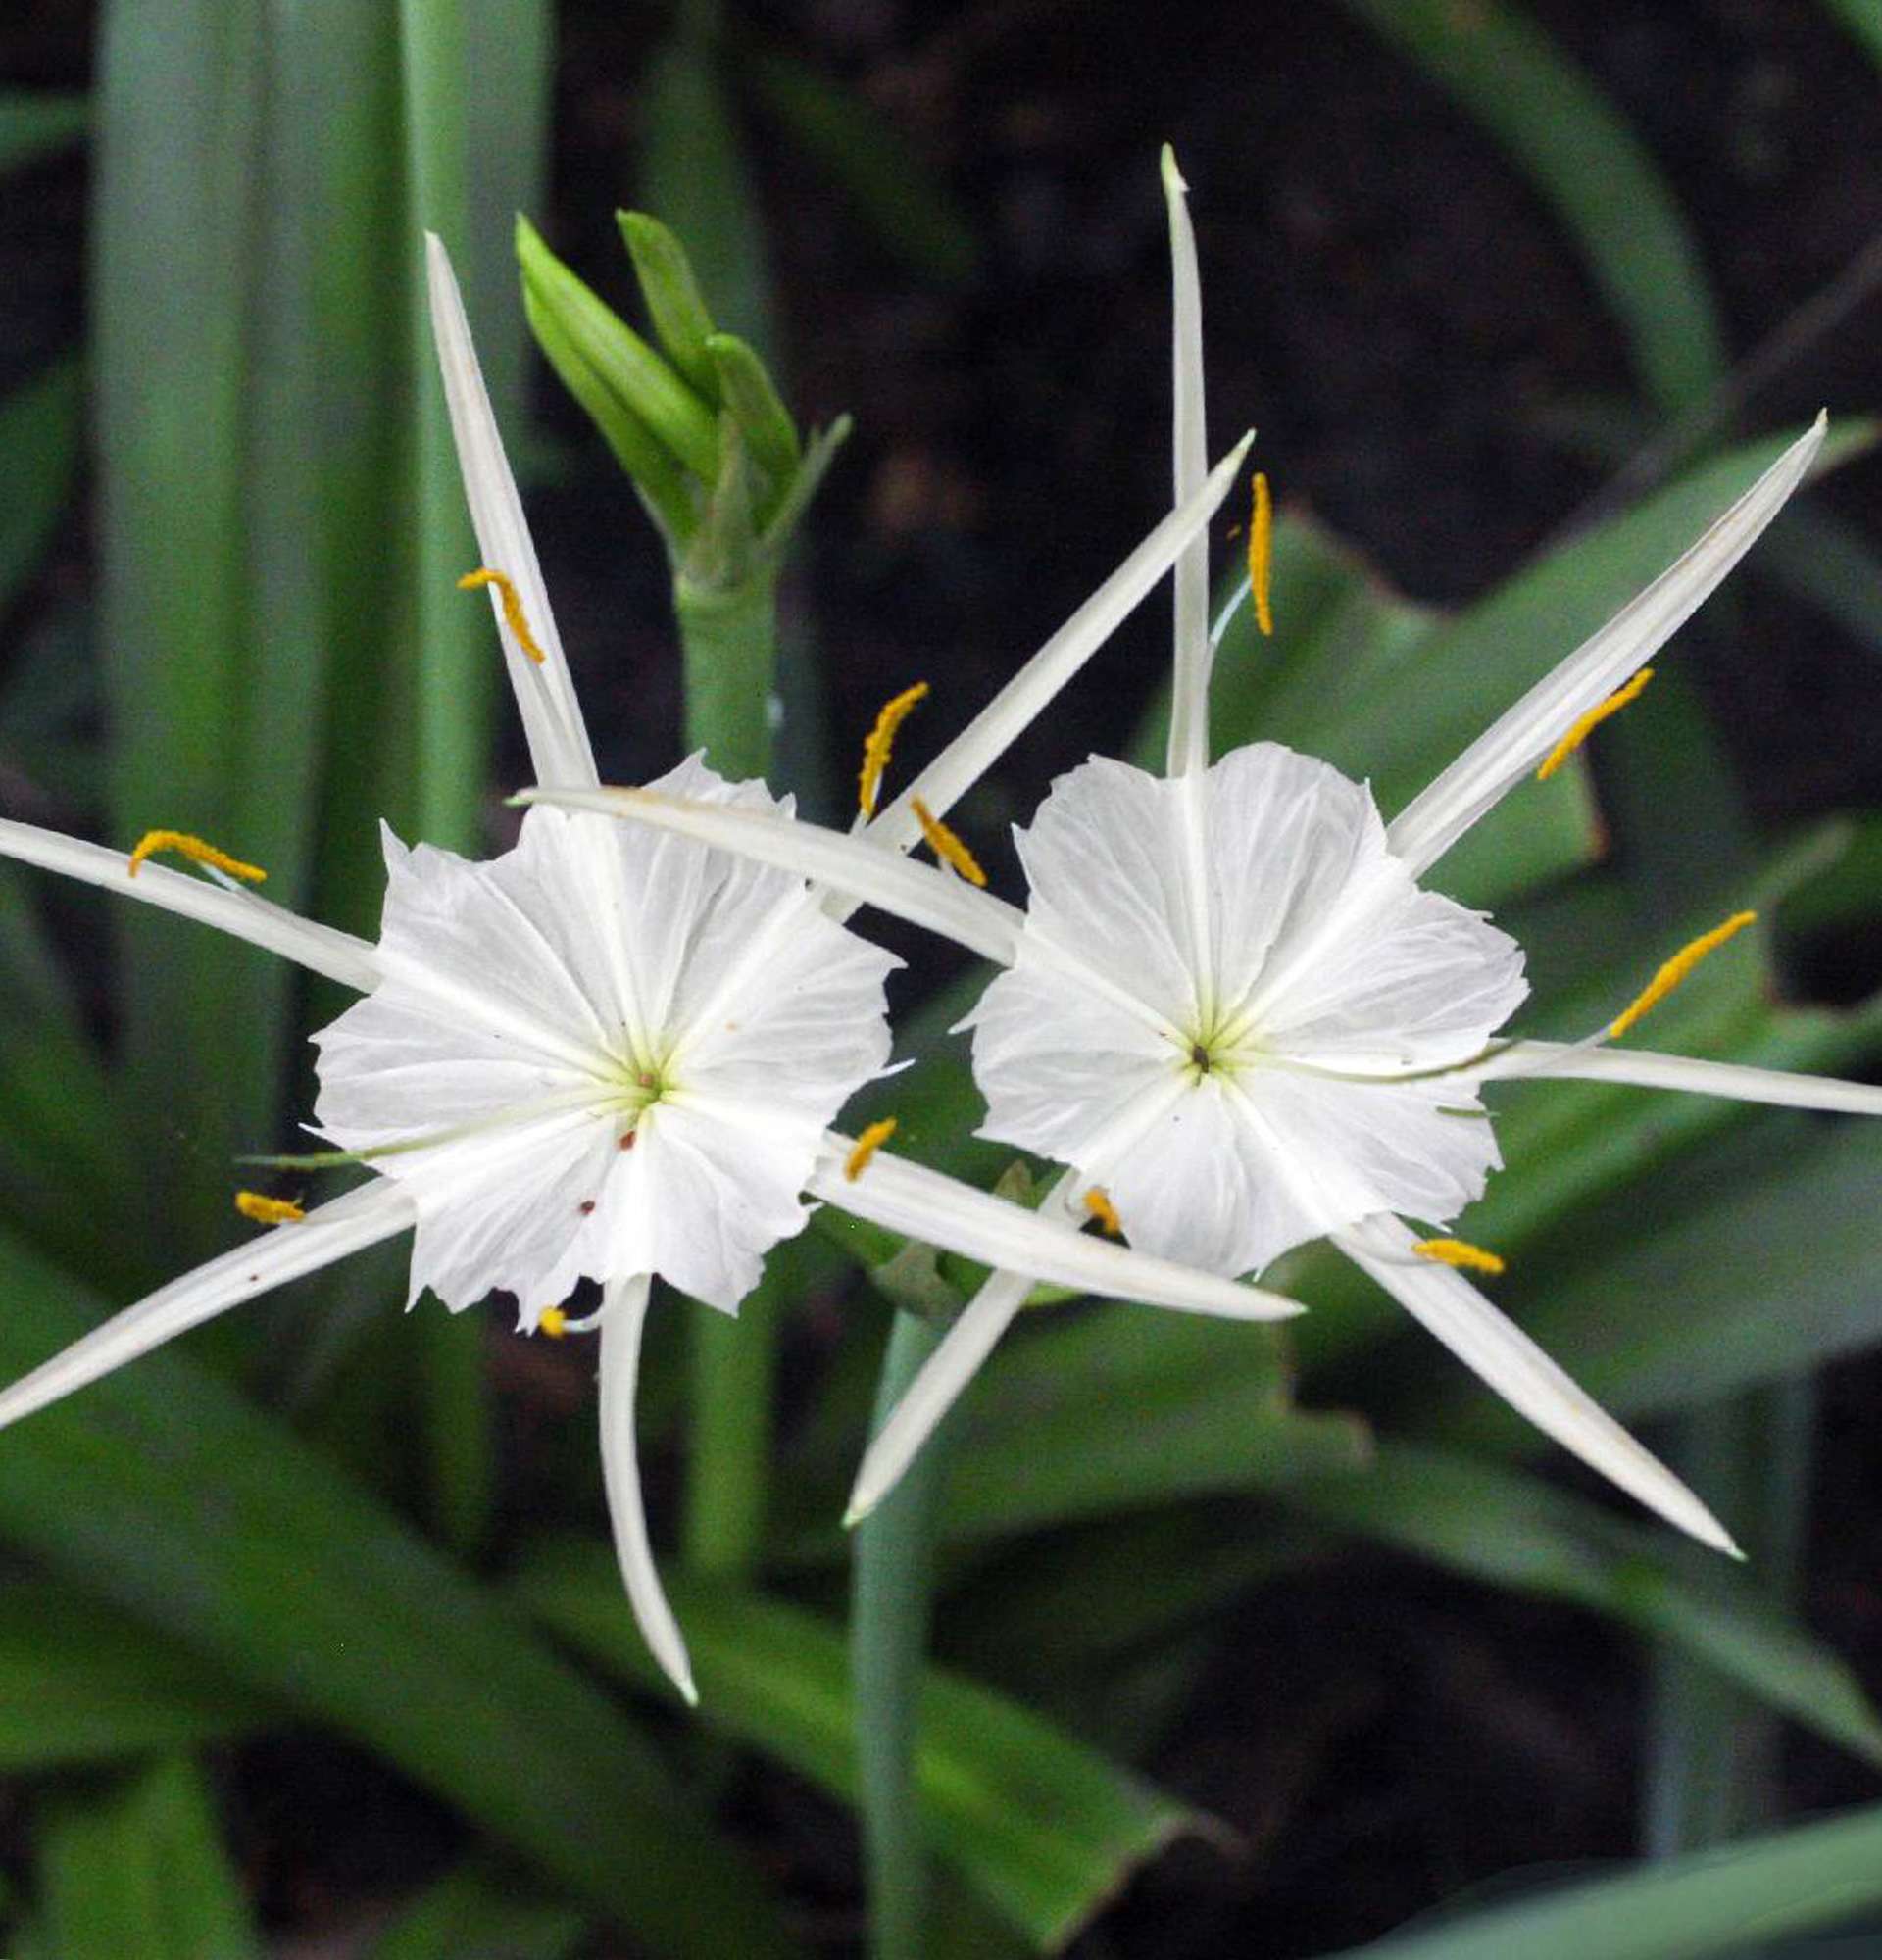  лілія павук фото - біла квітка Гіменокаліс